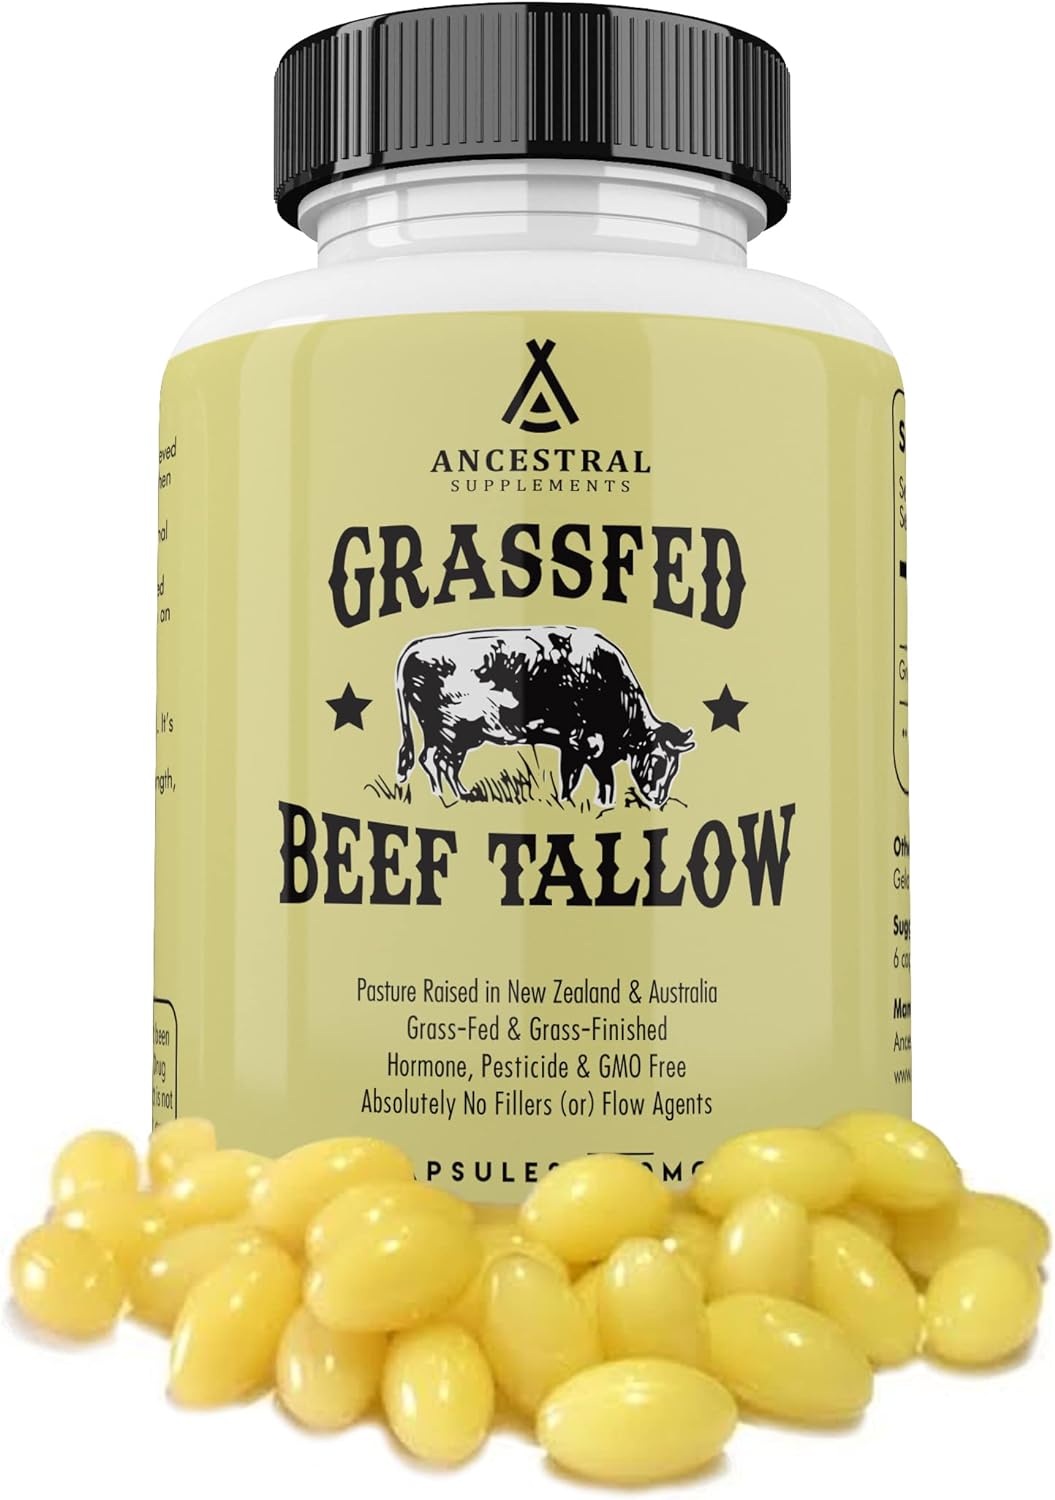 Ancestral Supplements Grassfed Beef Tallow